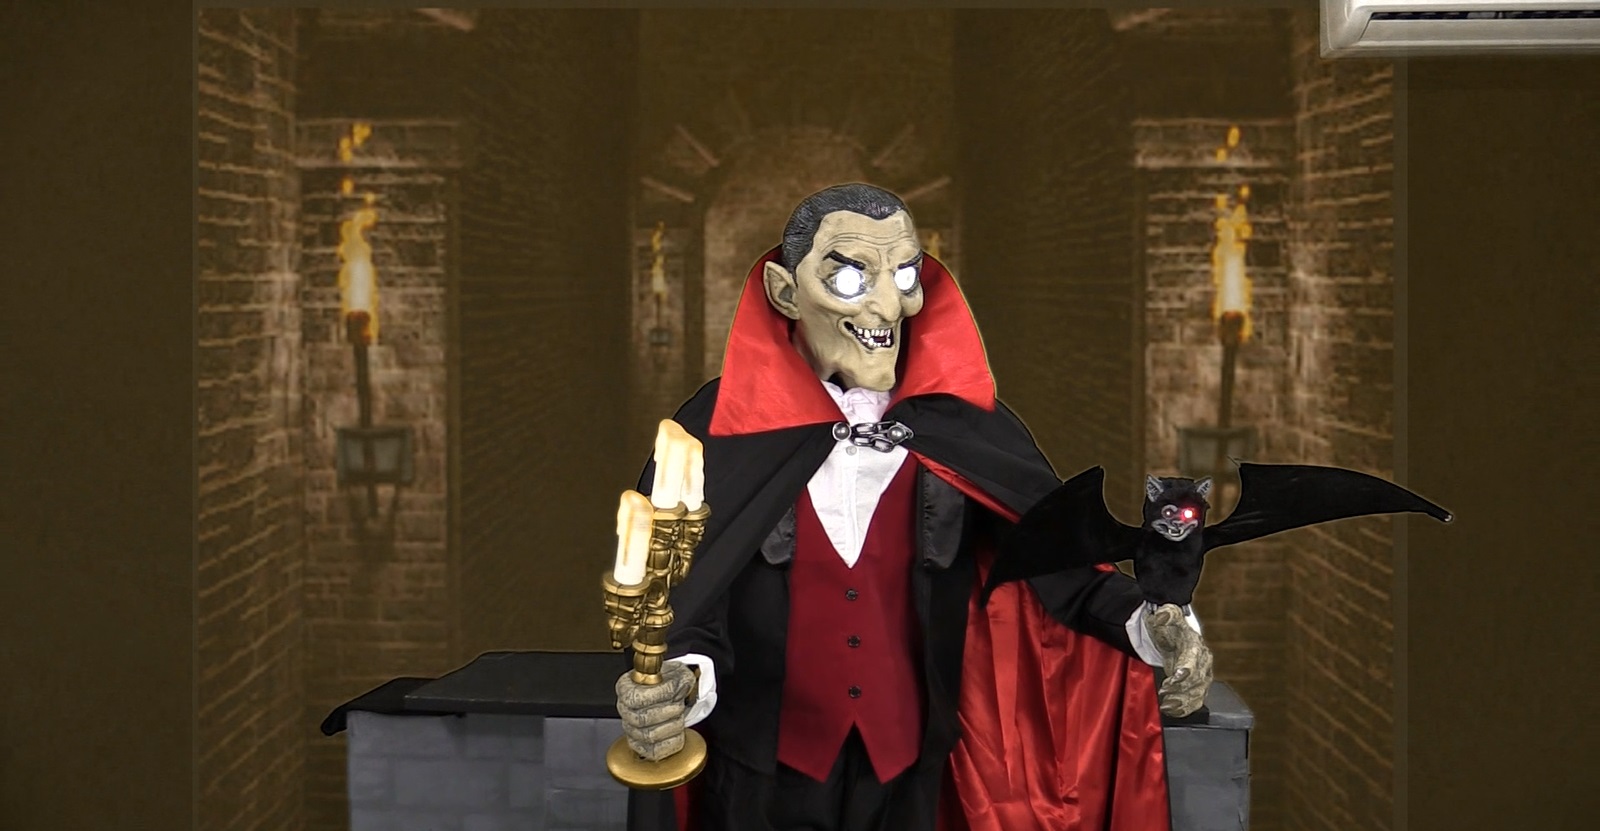 Count Creepovic